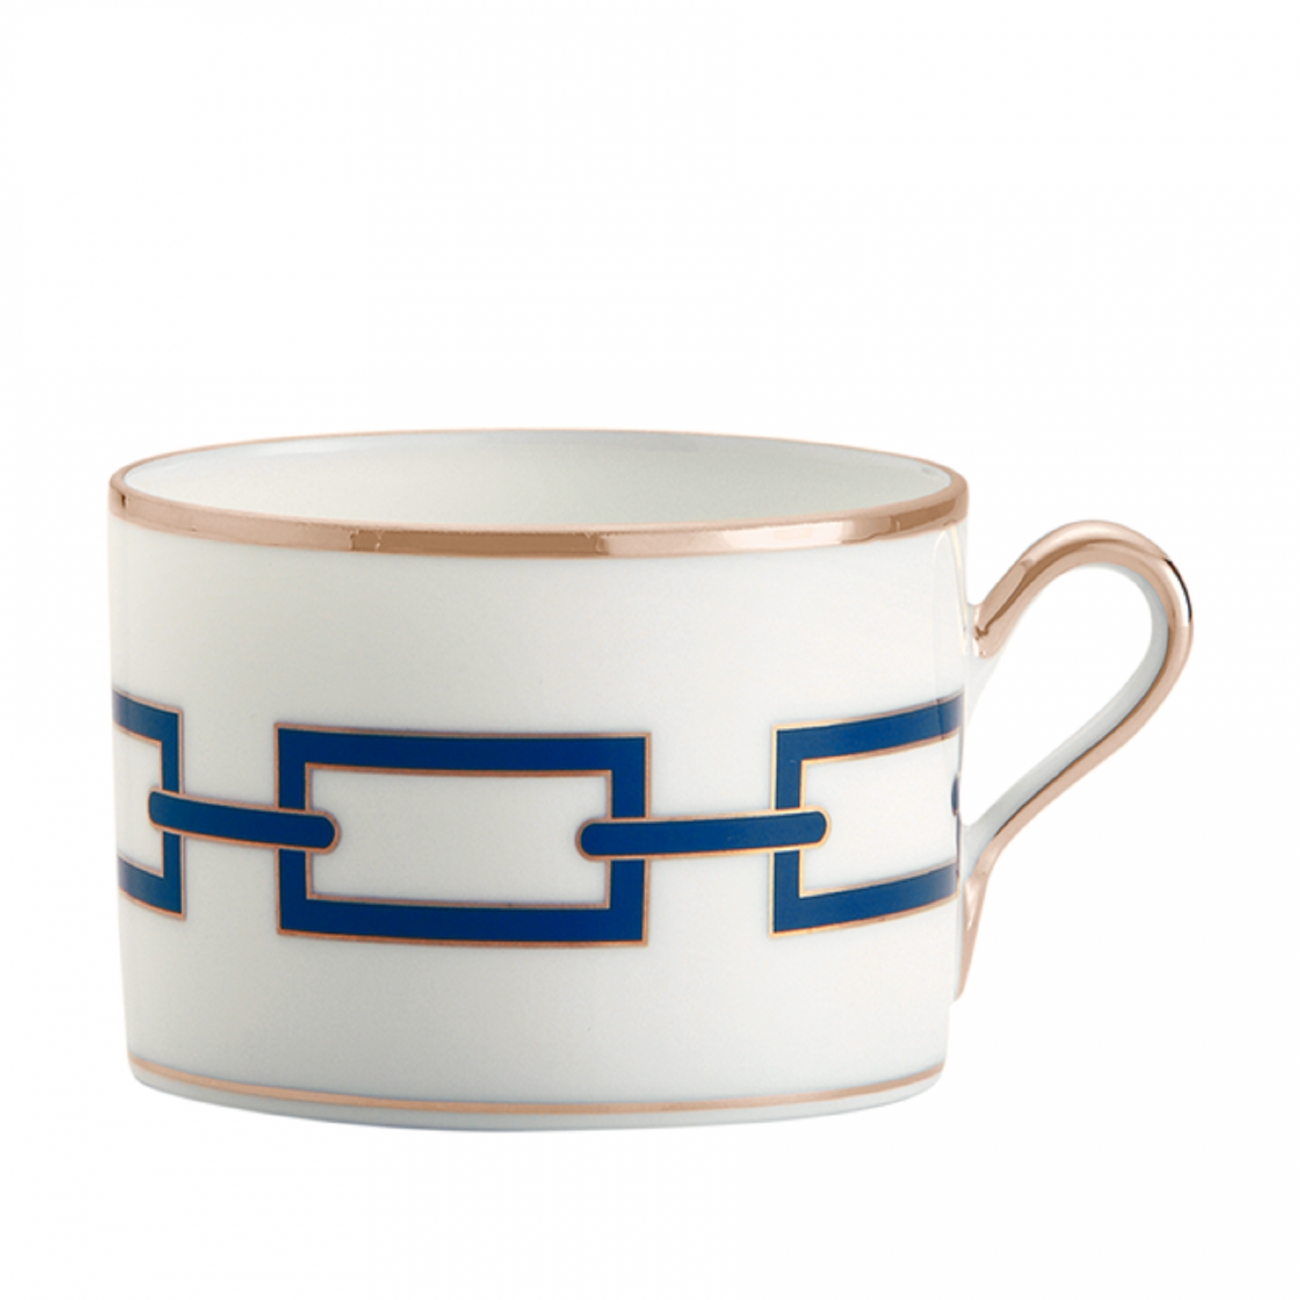 Ginori 1735 Catene Set of 2 Tea cup